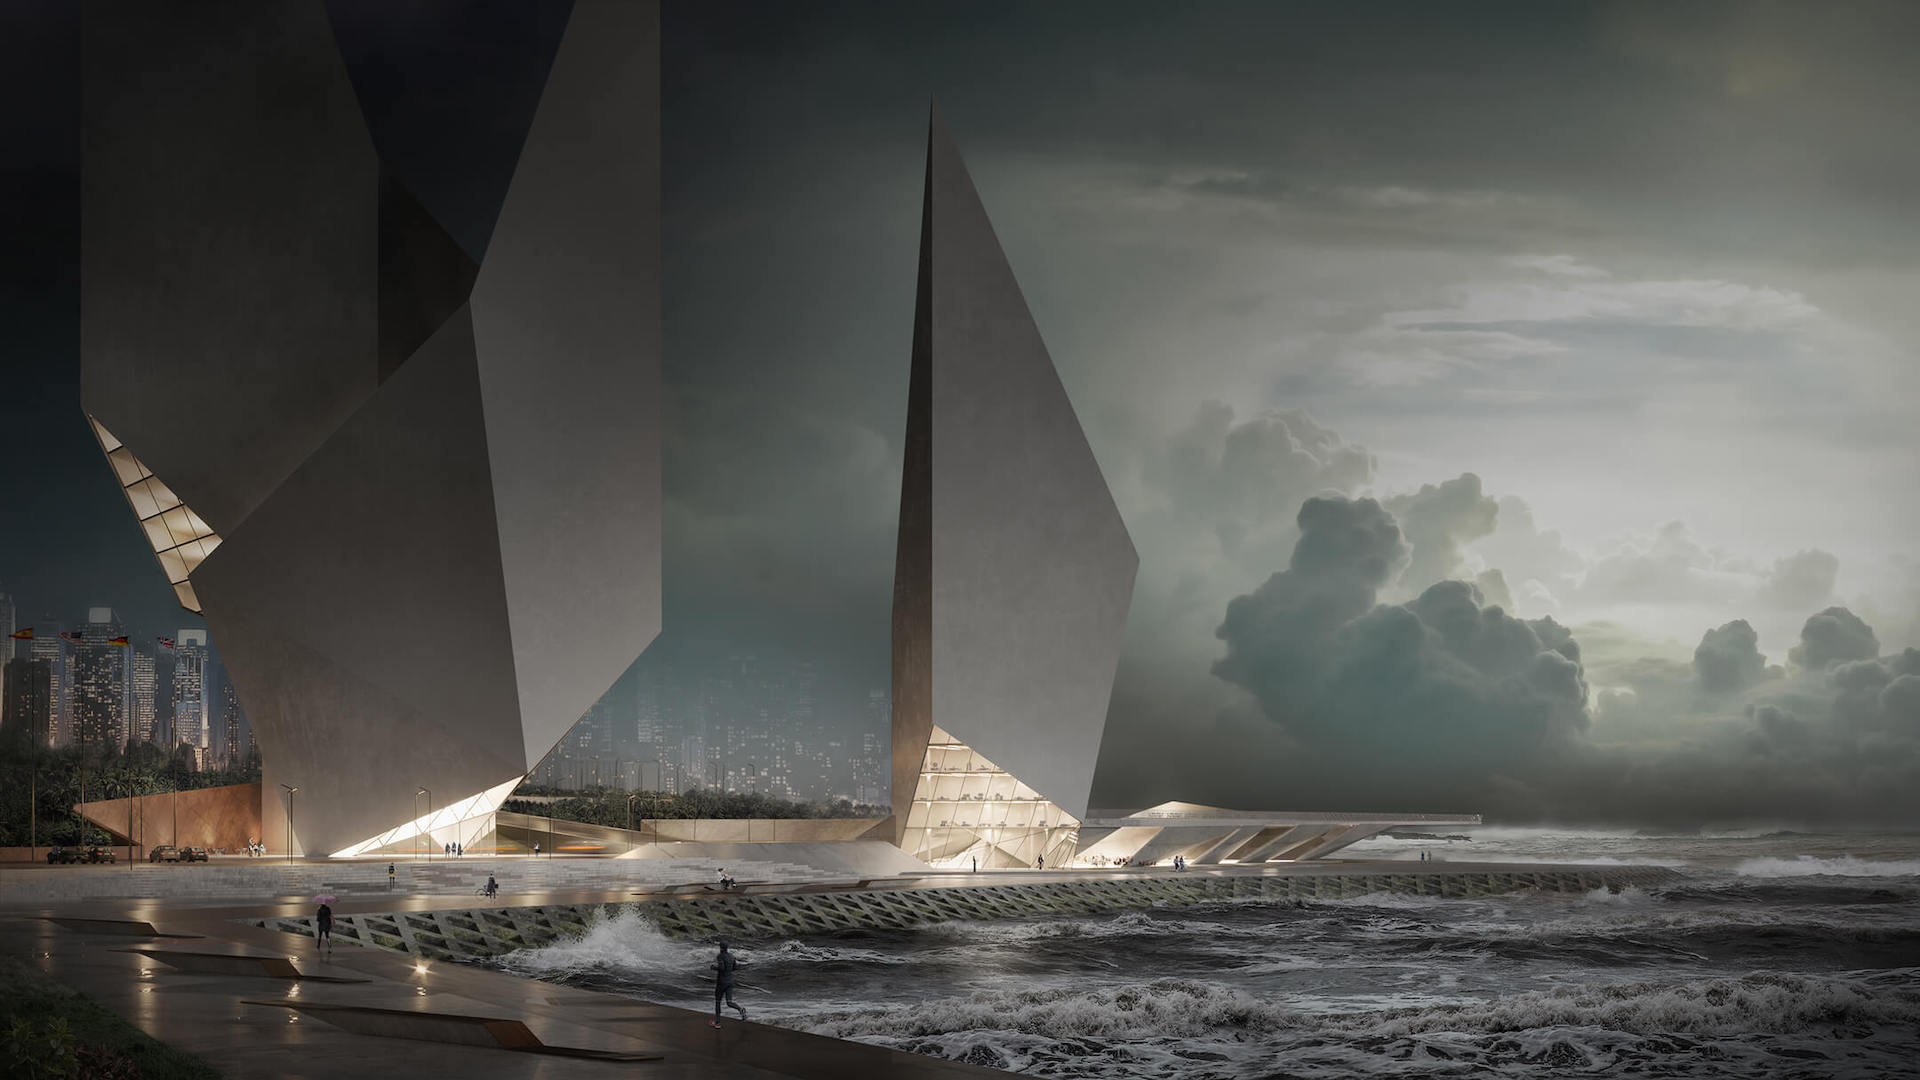 Photorealistic Skyscraper 3D Rendering for a Hotel Design